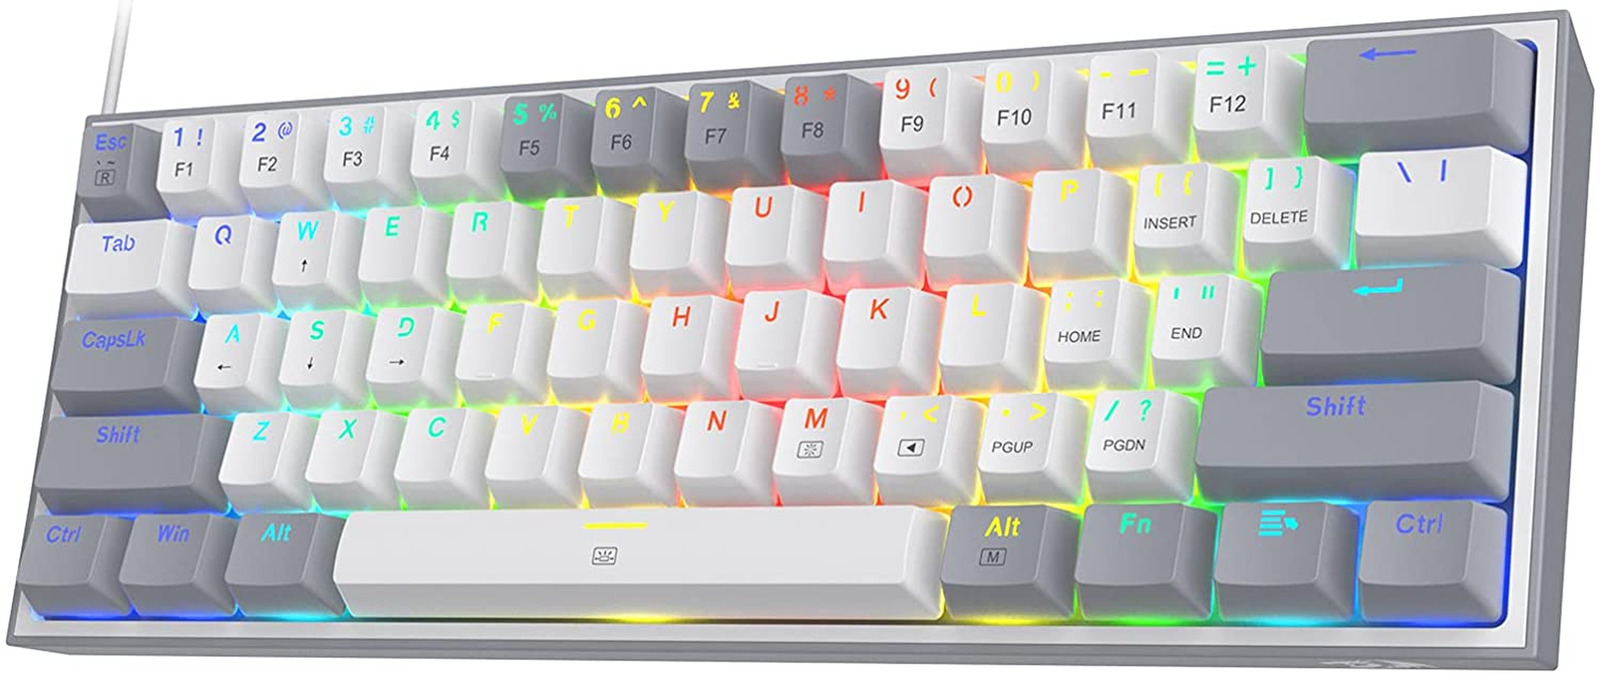 K617 Fizz 60% Wired RGB Gaming Keyboard - 61 Keys, Hot-Swap, Linear Red Switch, 